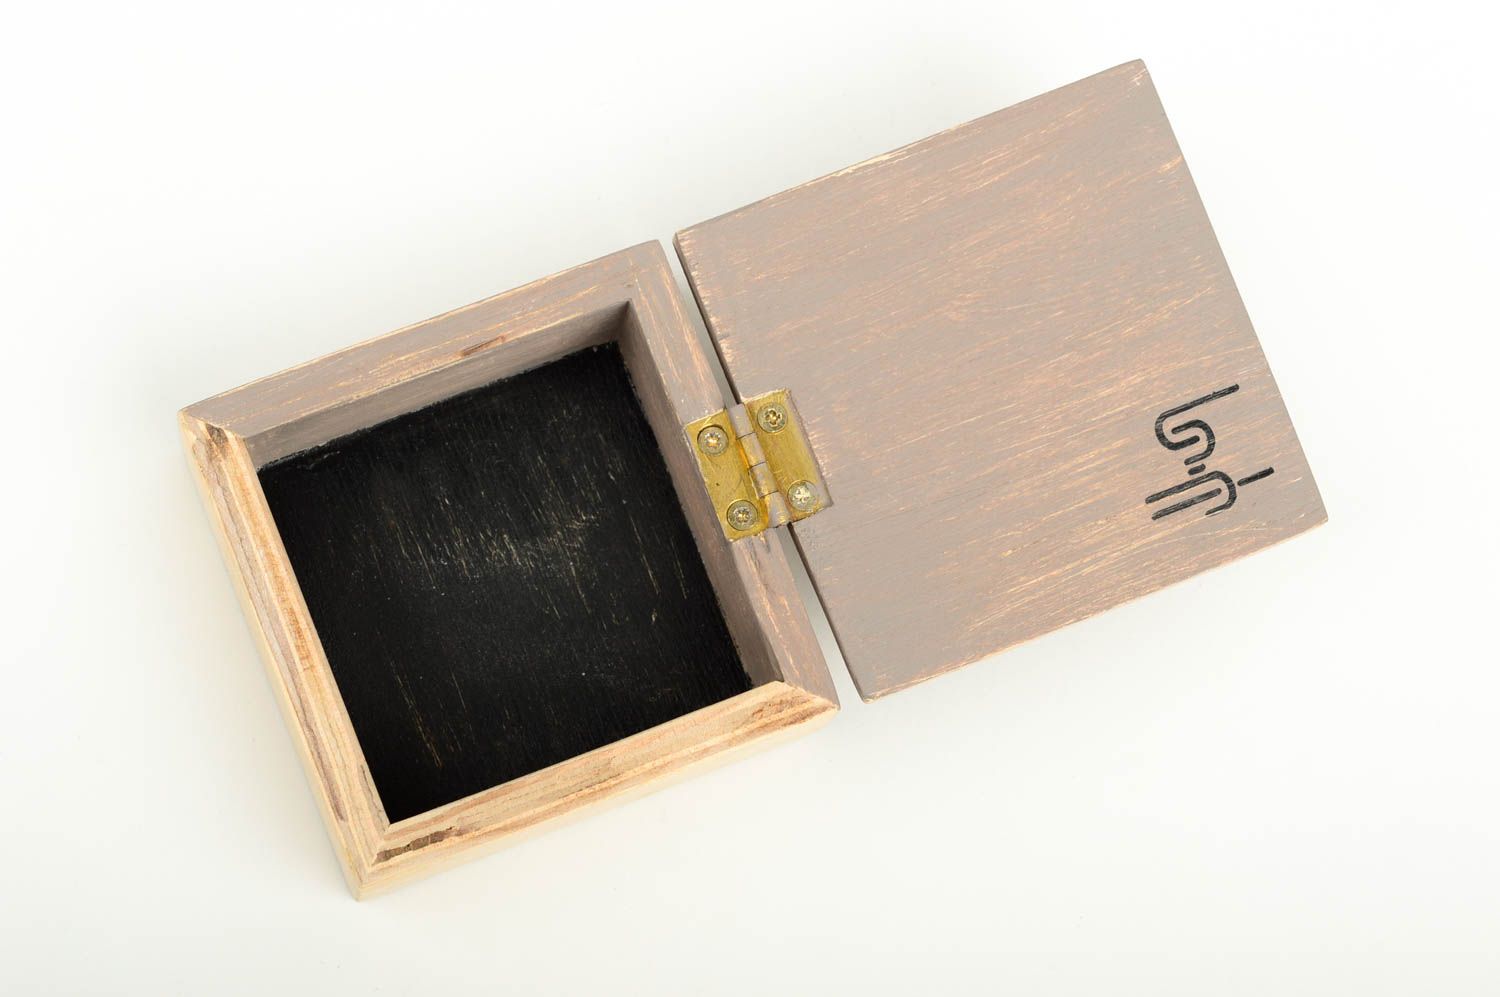 Handmade stylish jewelry box cute wooden box unusual accessory home decor photo 5